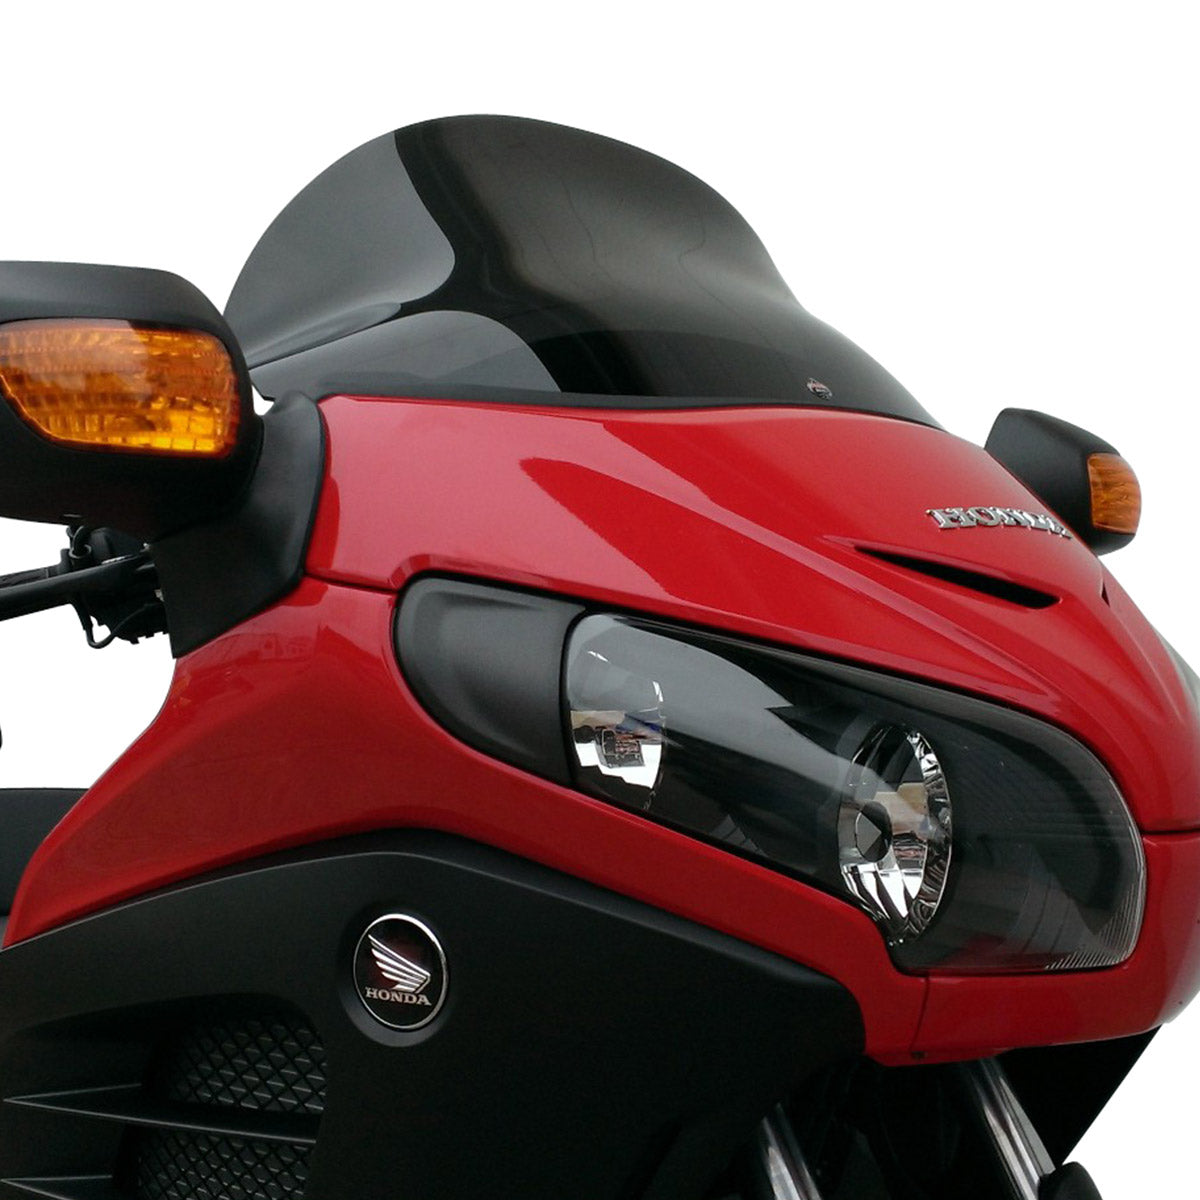 14" Dark Smoke Flare™ Windshield for Honda® 2013-2016 F6B motorcycle models(14" Dark Smoke)